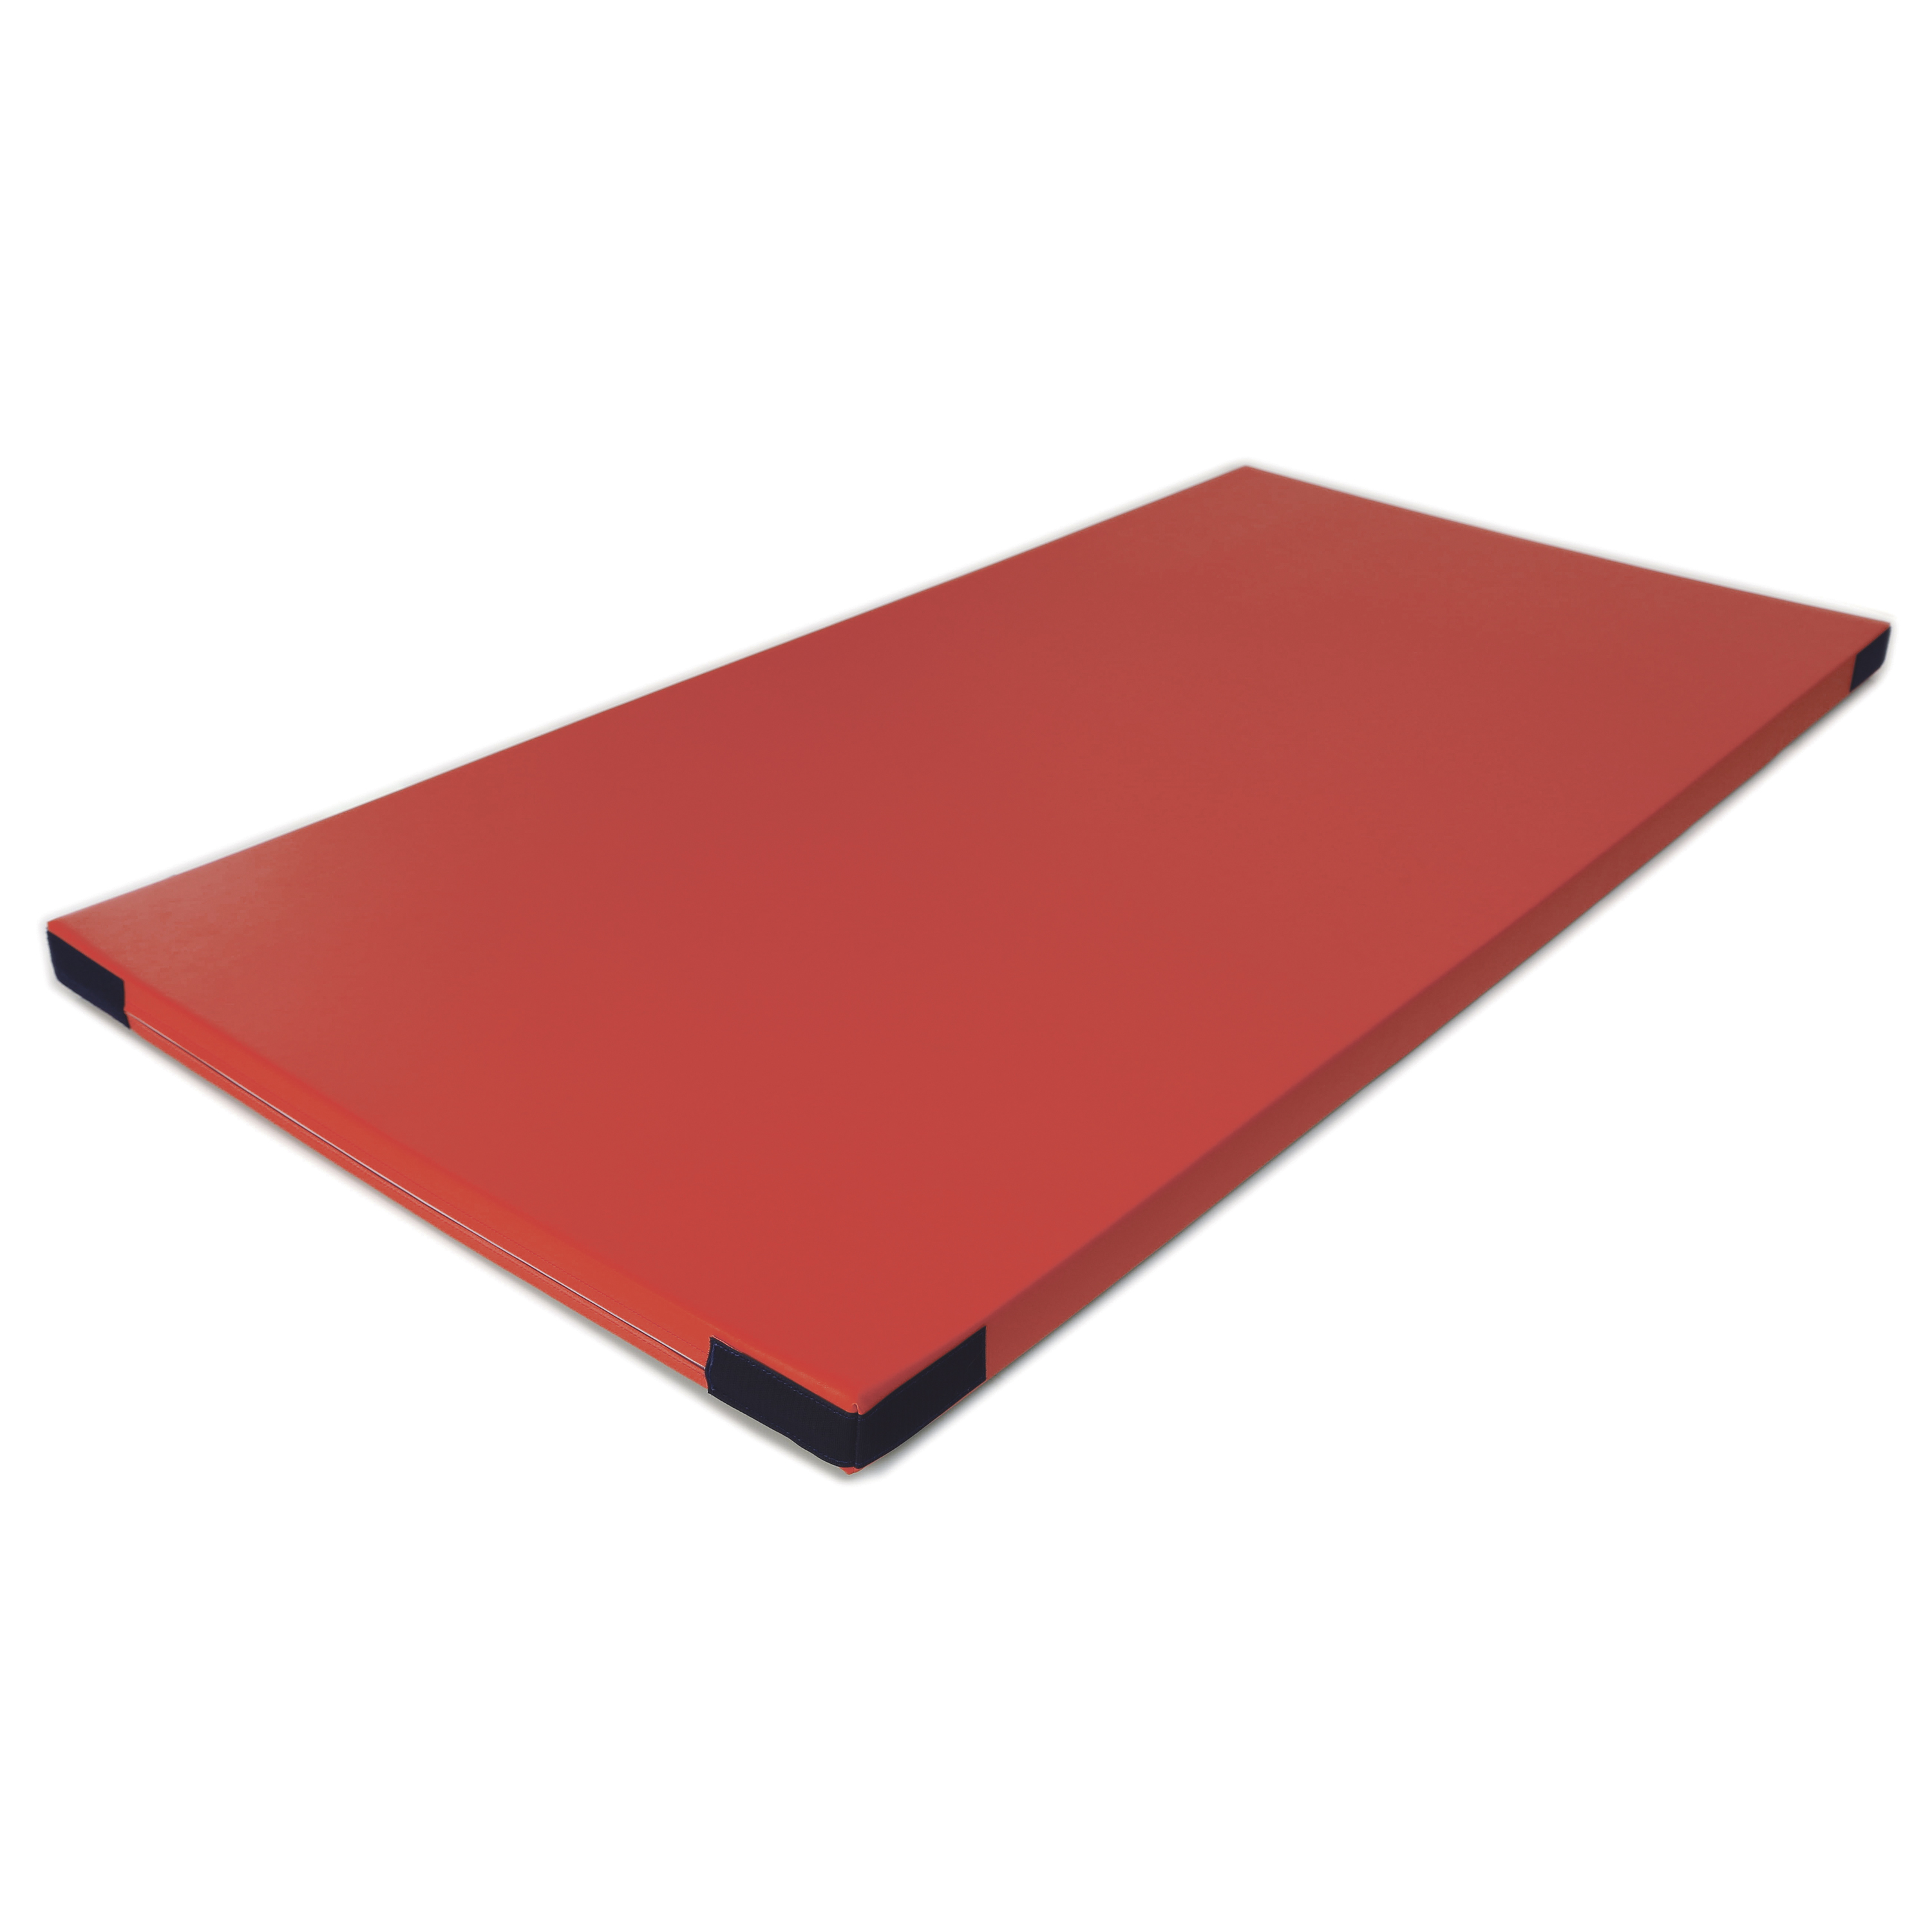 Fallschutzmatte Superleicht 'rot' Klett, 200 x 100 cm